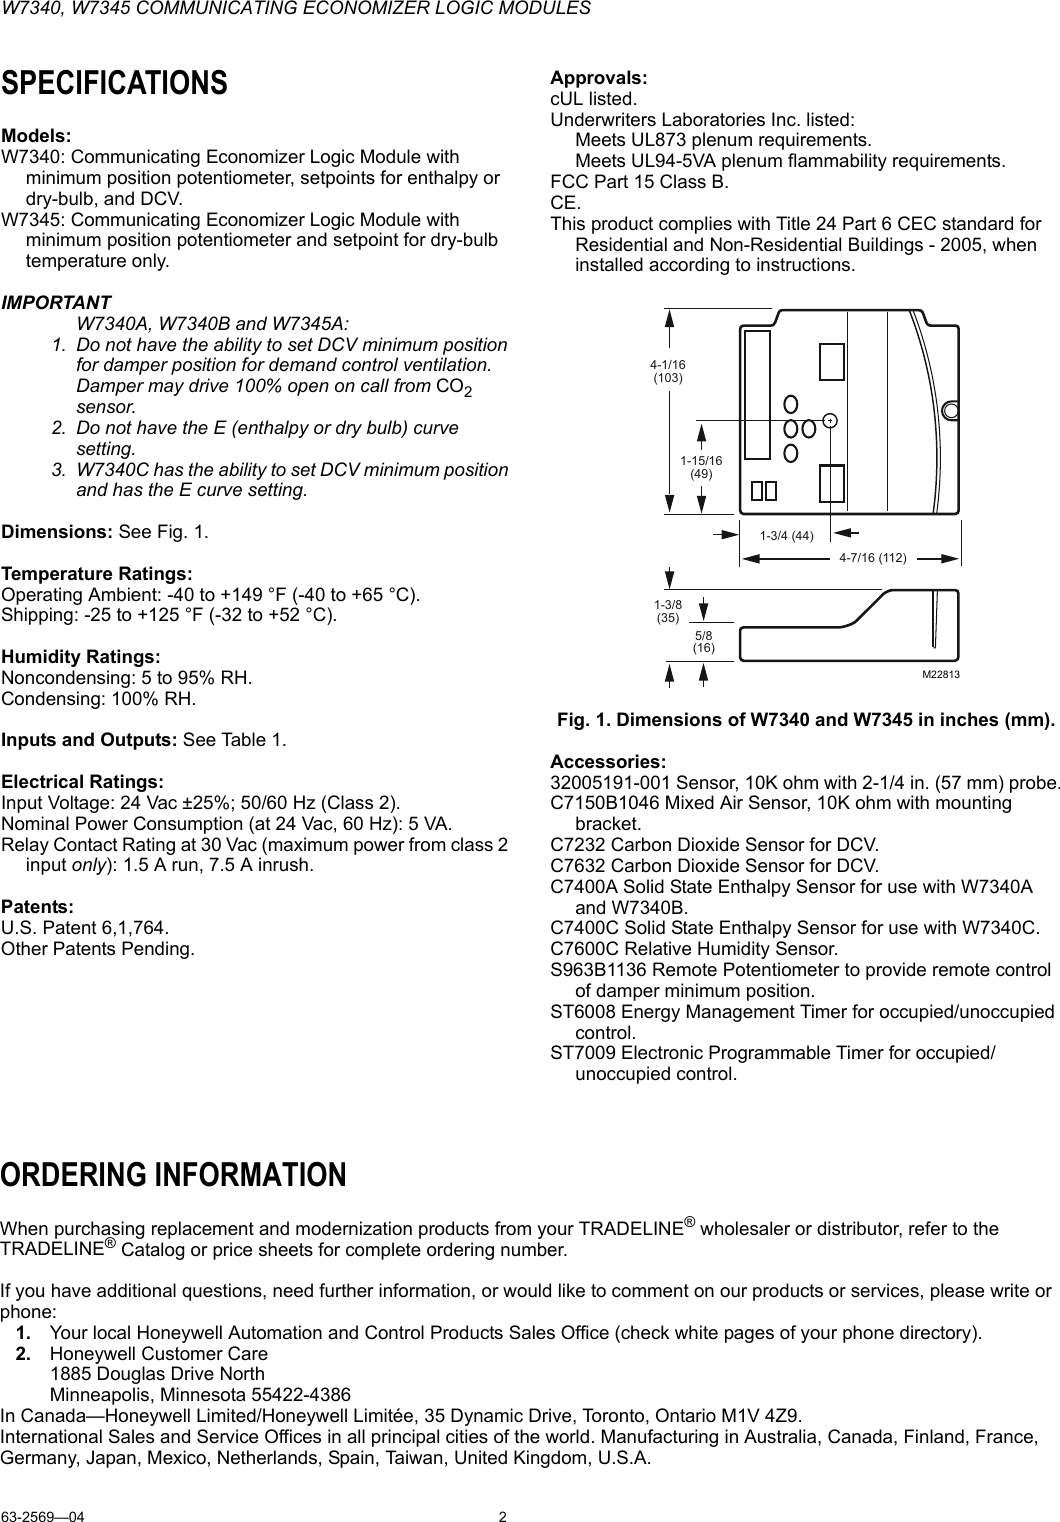 Page 2 of 12 - Honeywell Honeywell-W7340-Users-Manual- 63-2569-4 - W7340, W7345 Communicating Economizer Logic Modules  Honeywell-w7340-users-manual